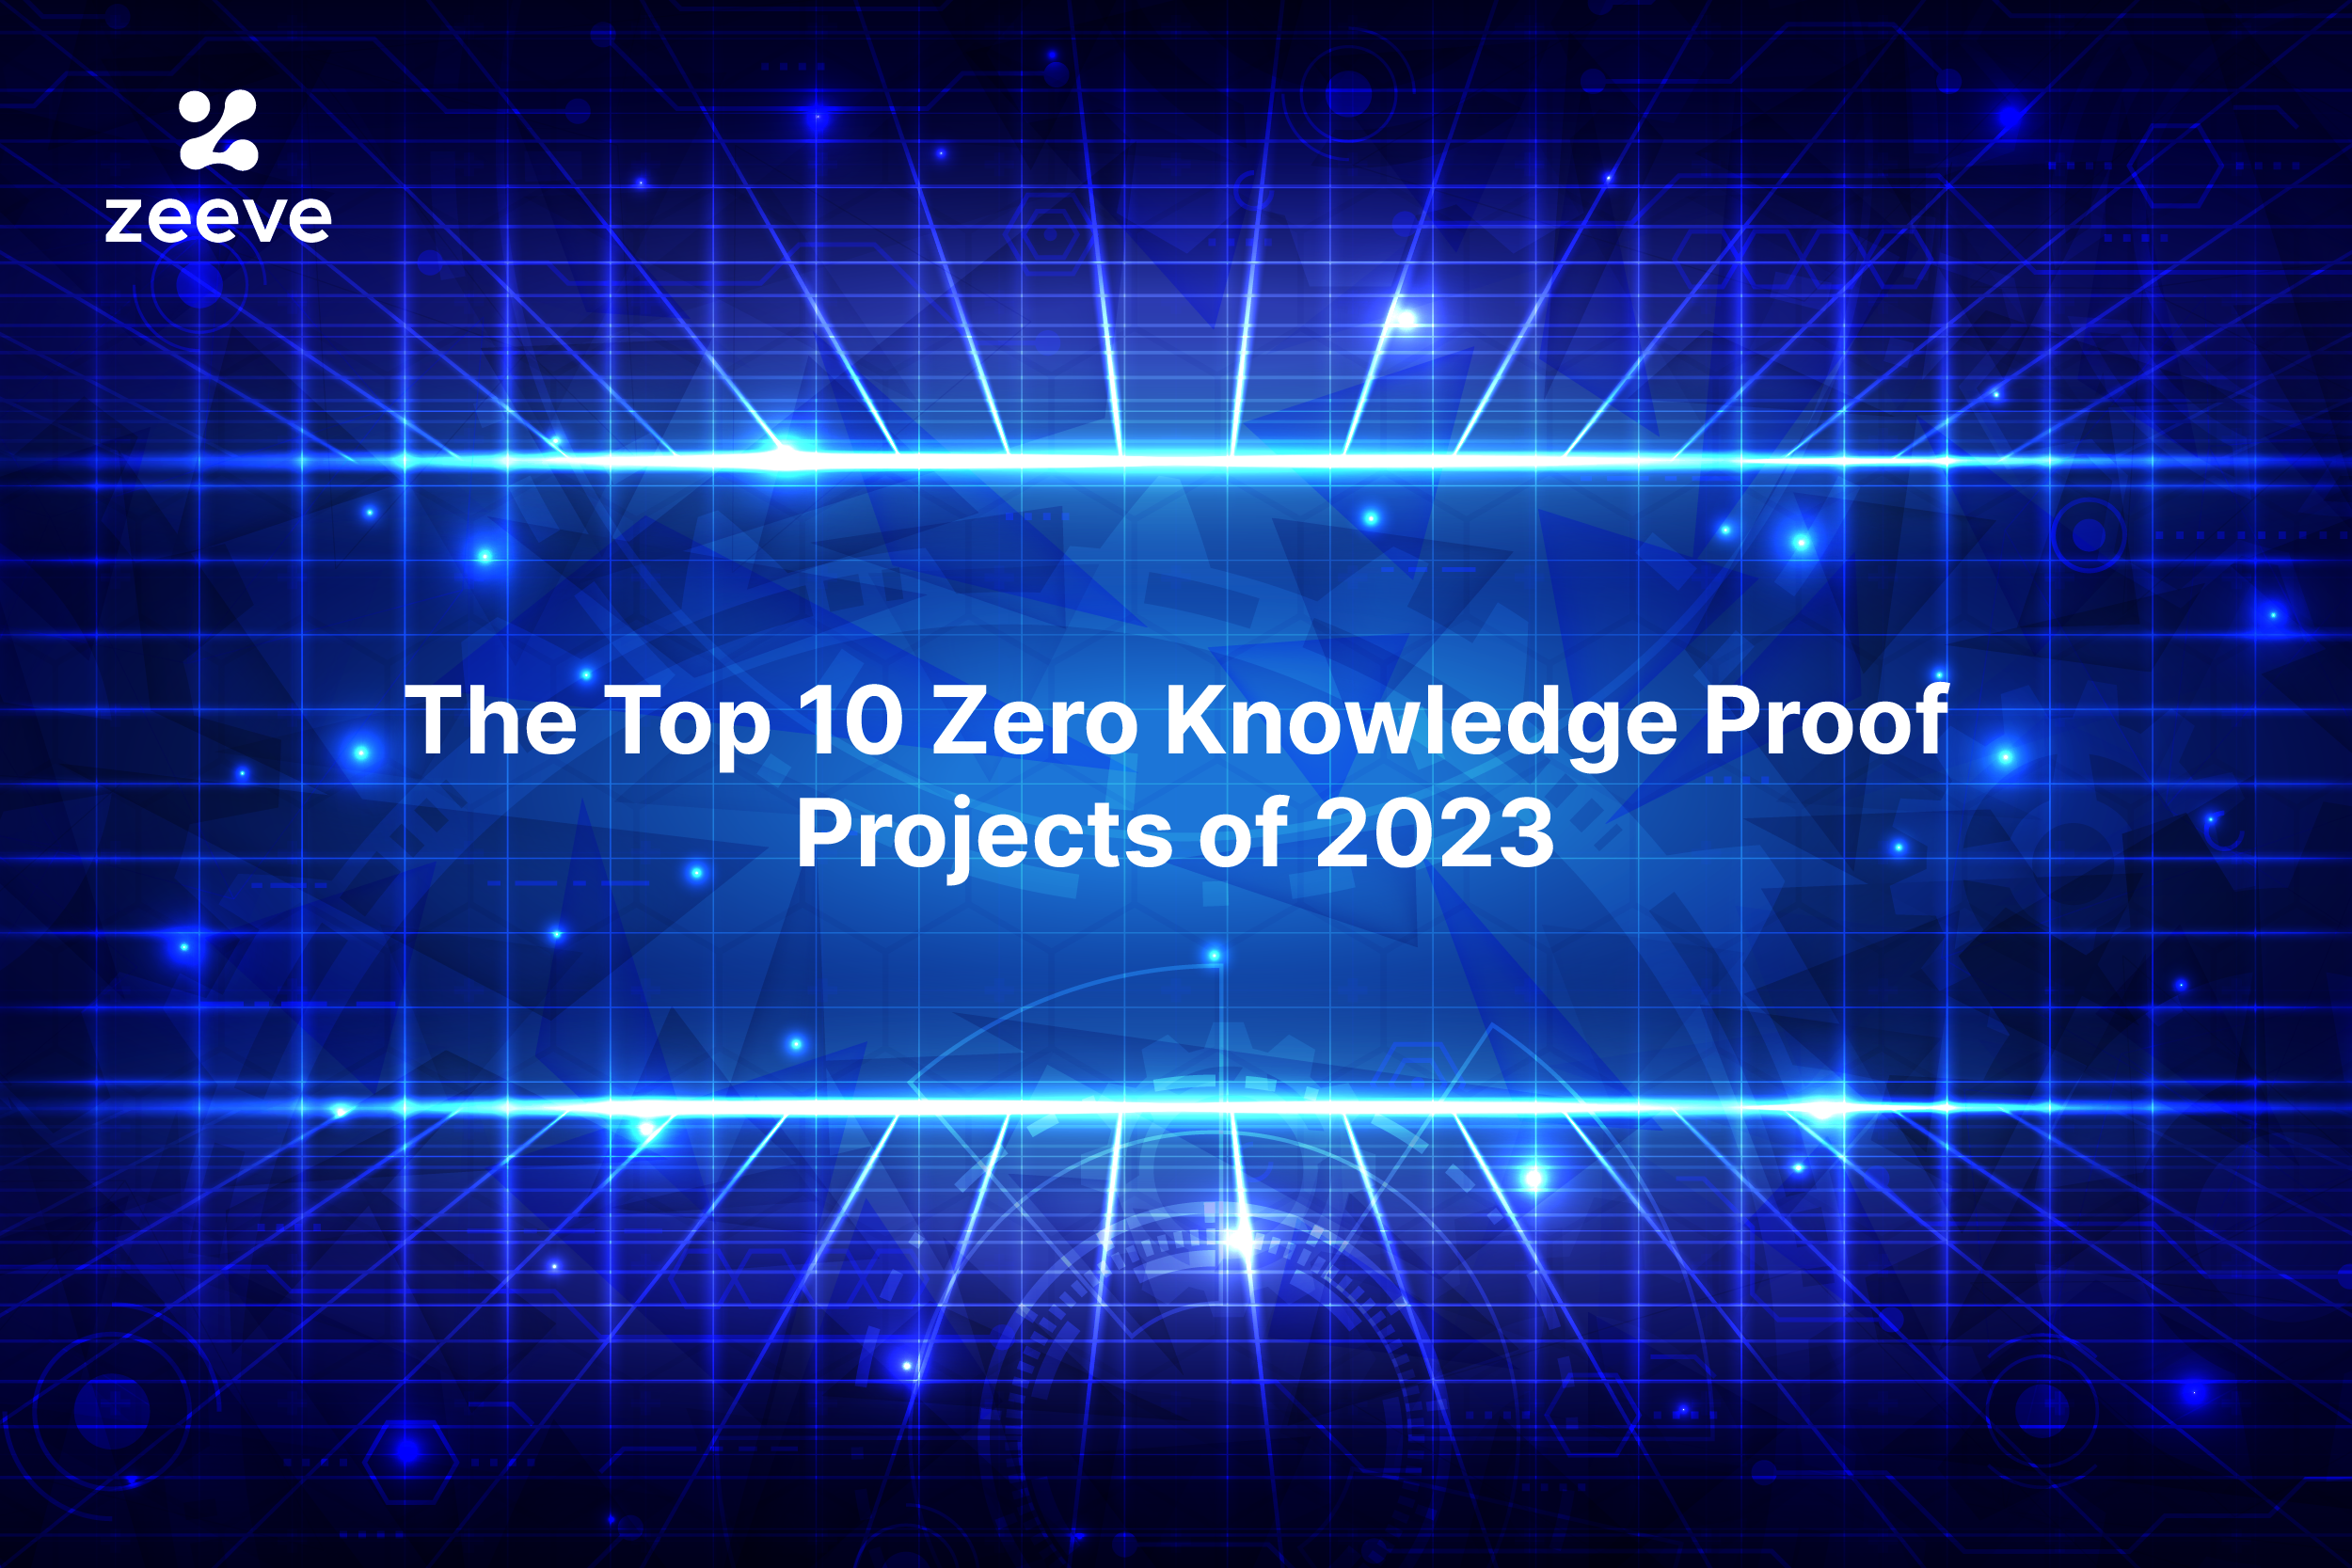 O que é Zero Knowledge Protocol (ZKP)?